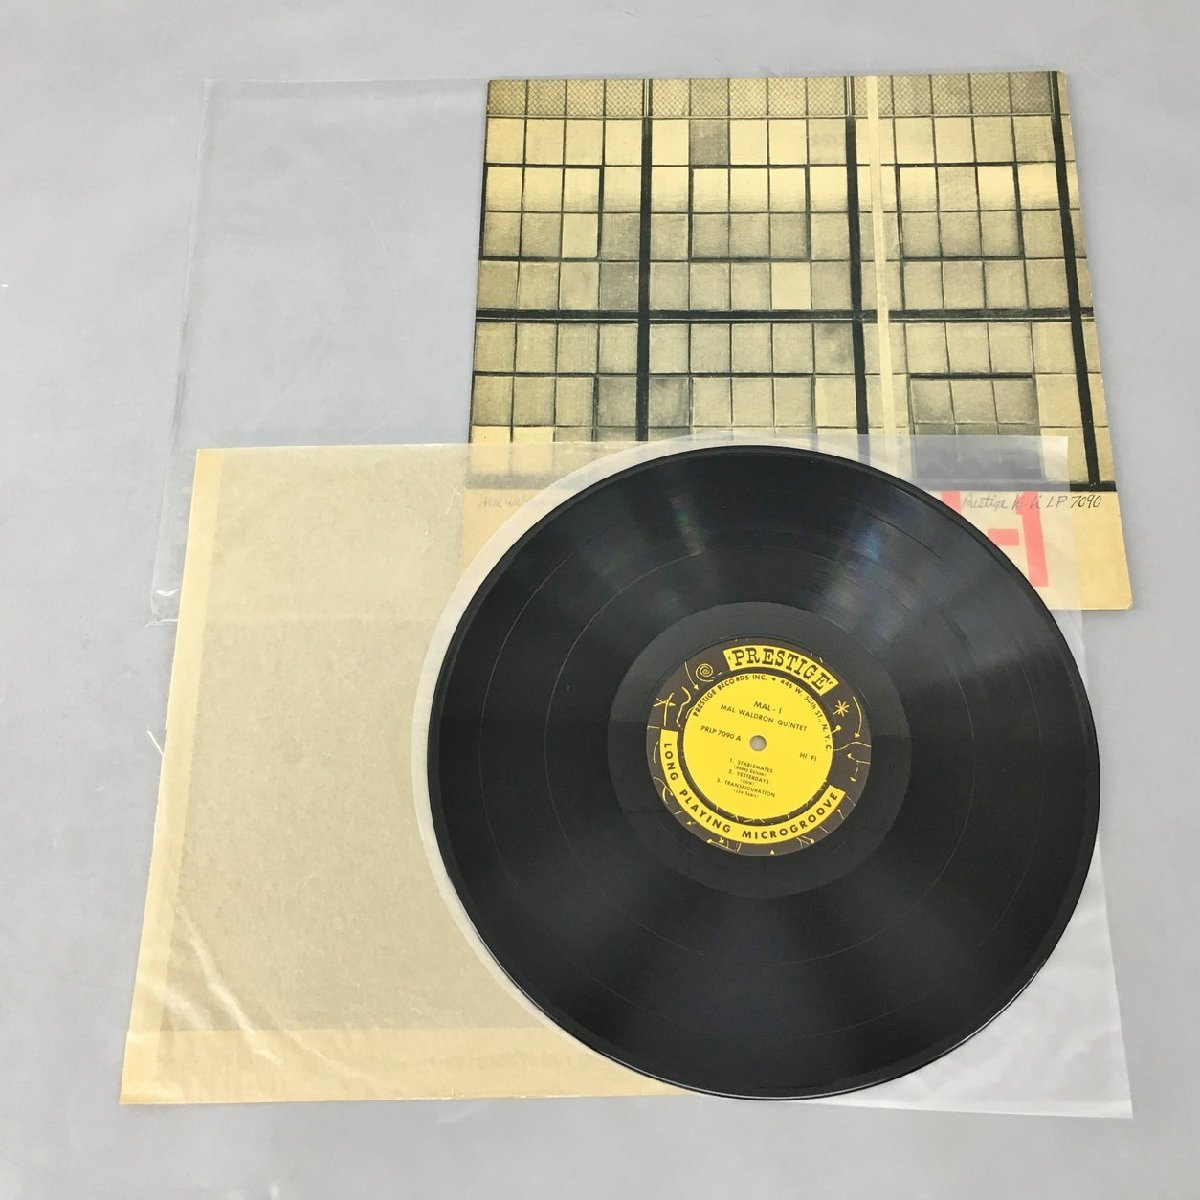 LPレコード Mal-1 MAL WALDRON PRESTIGE LP 7090 オリジナル盤 2312LO055_画像3